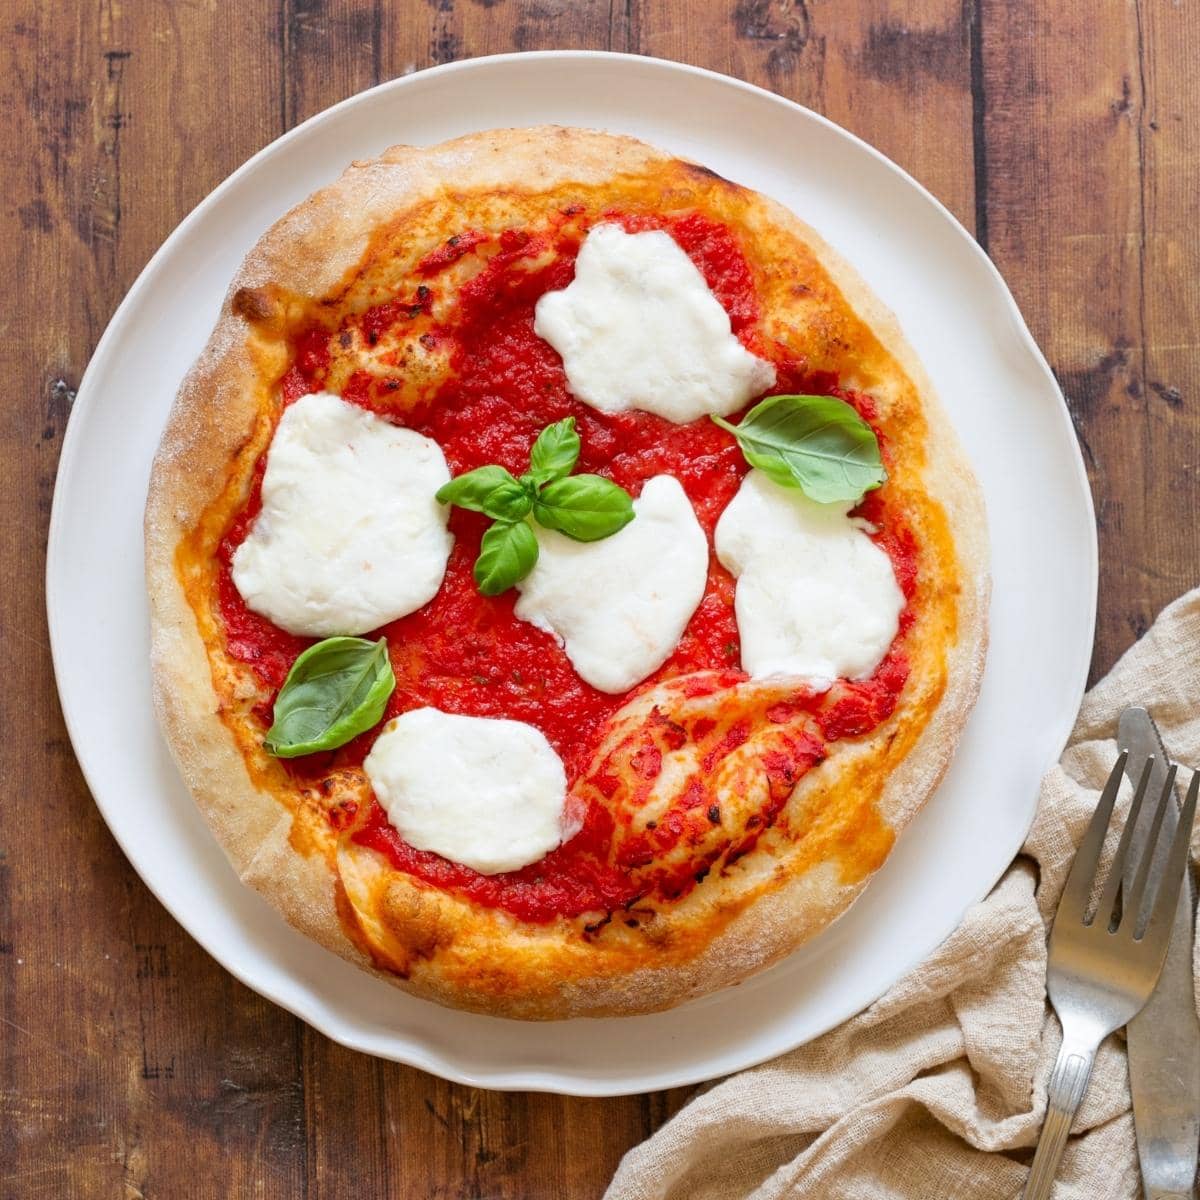 https://www.thepetitecook.com/wp-content/uploads/2022/06/air-fryer-pizza-recipe.jpg